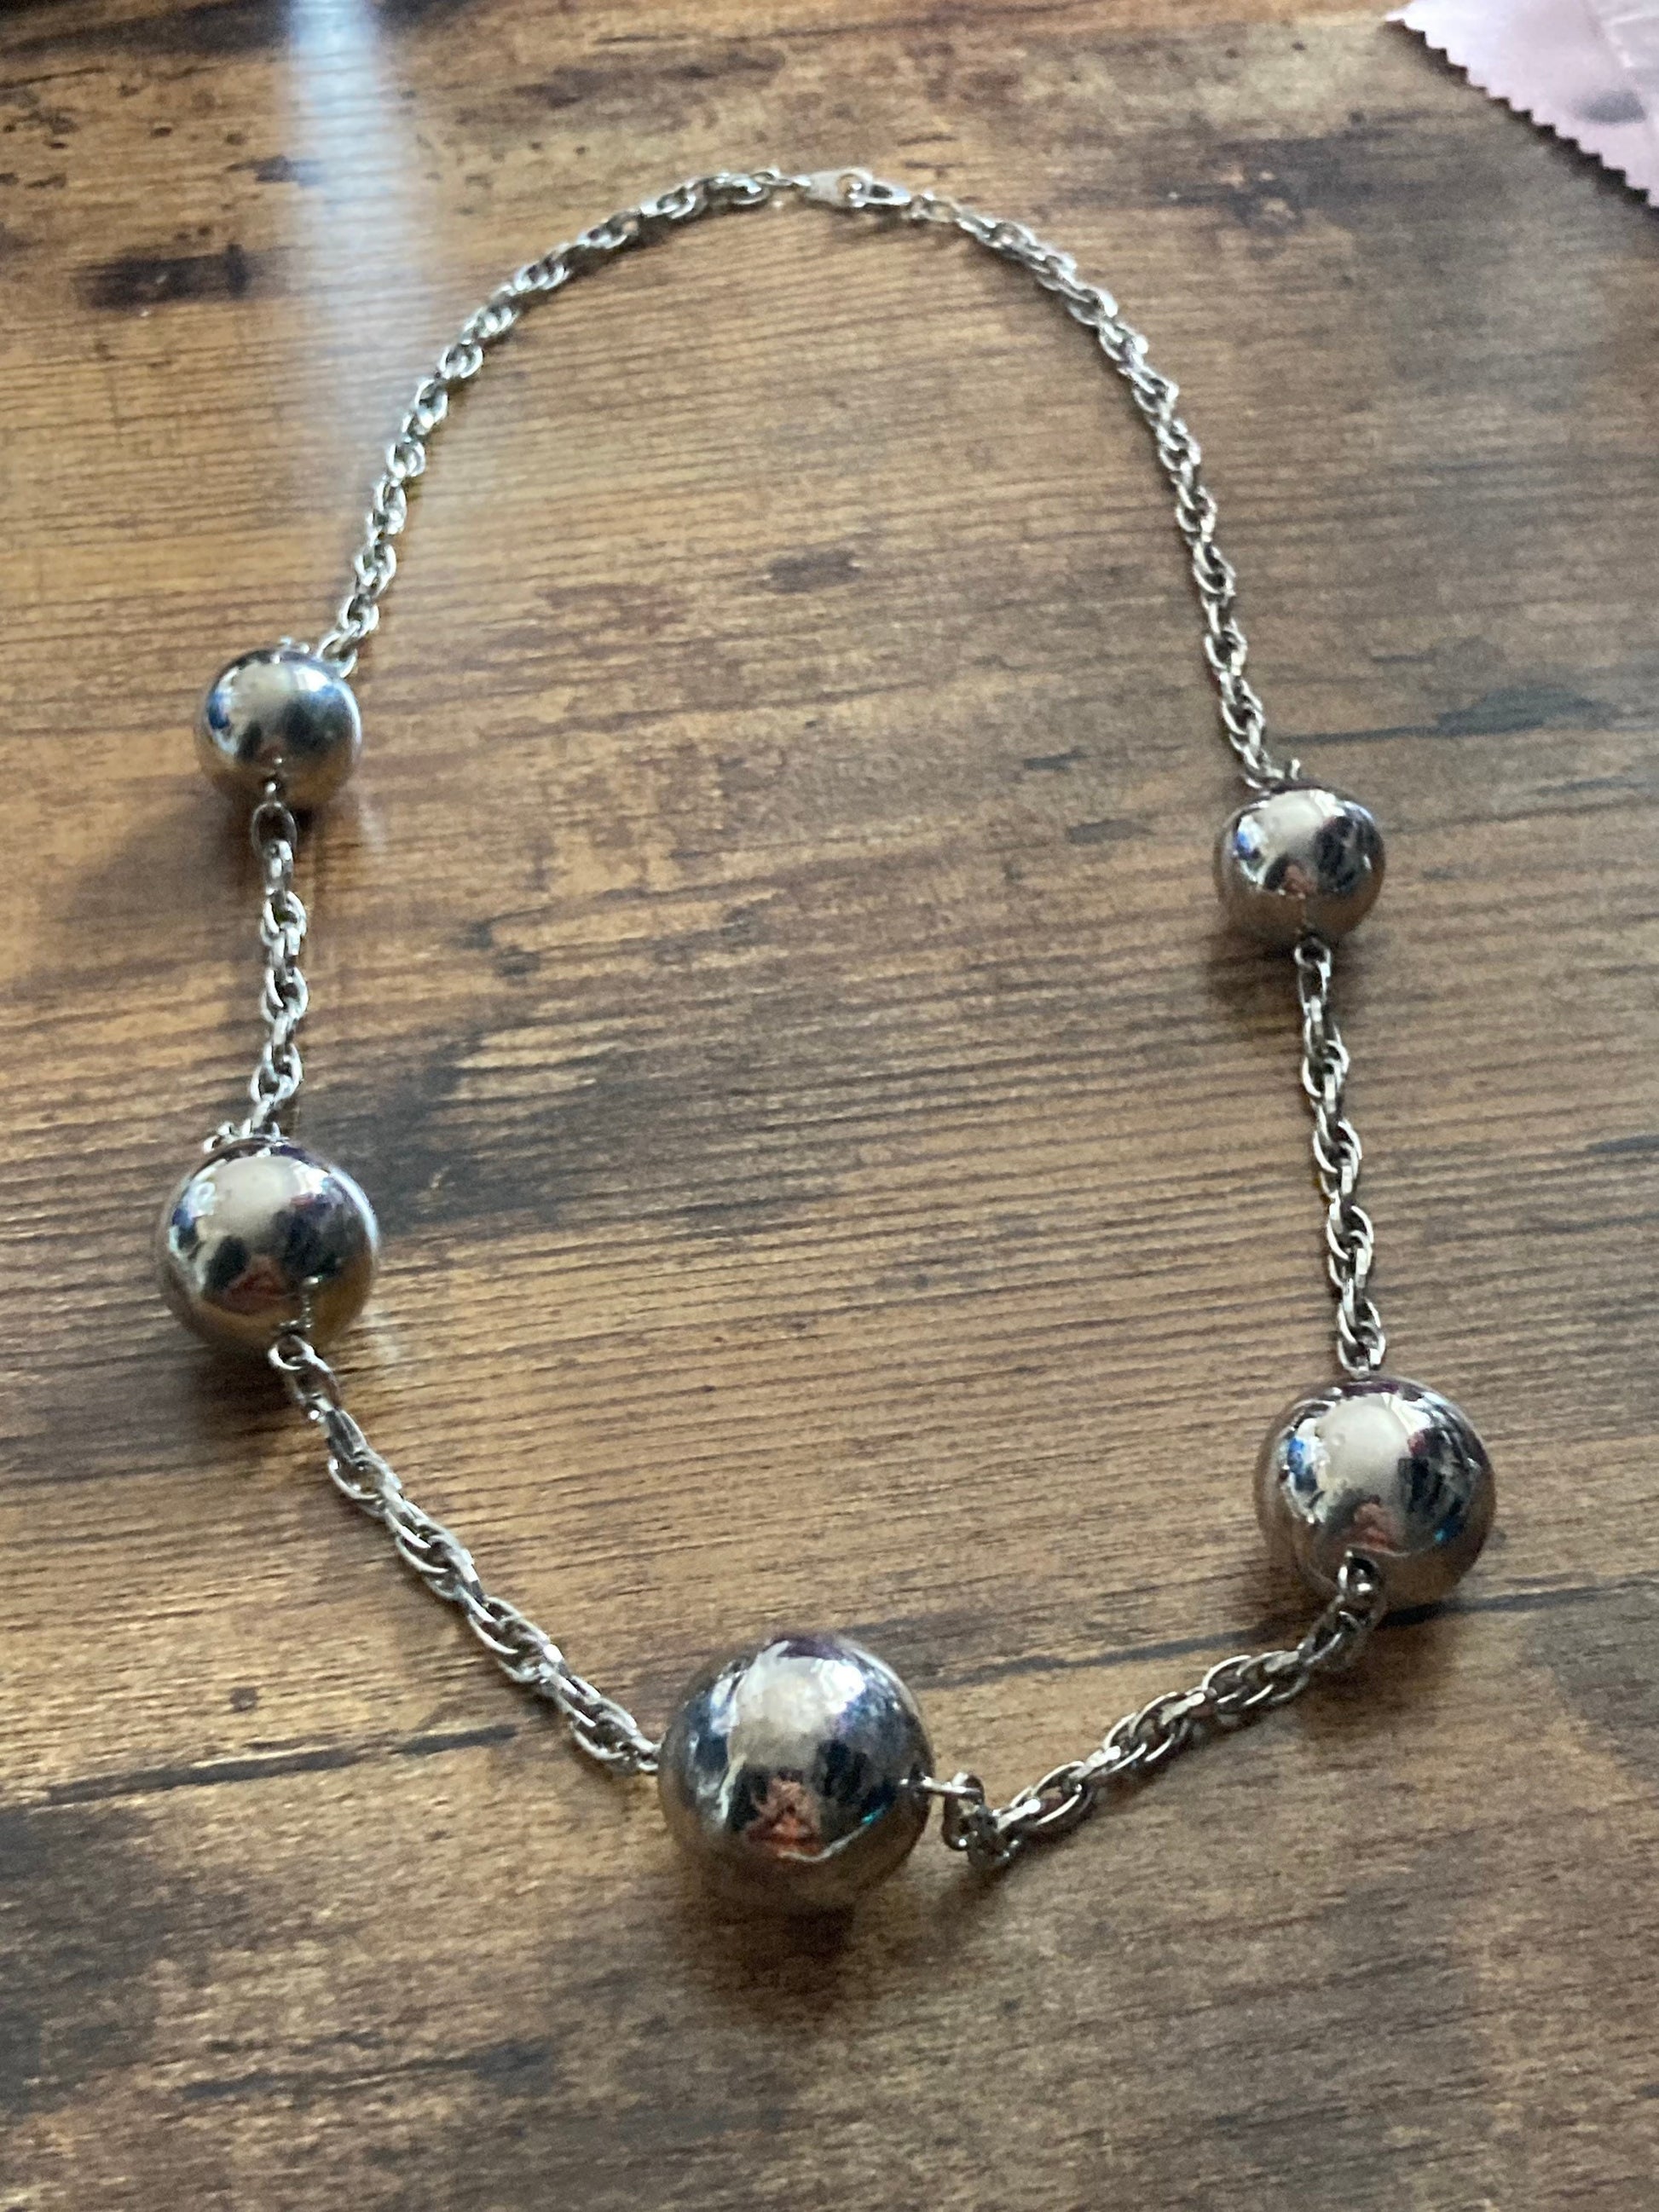 Oversized silver tone modernist 2cm ball station link necklace 54cm long